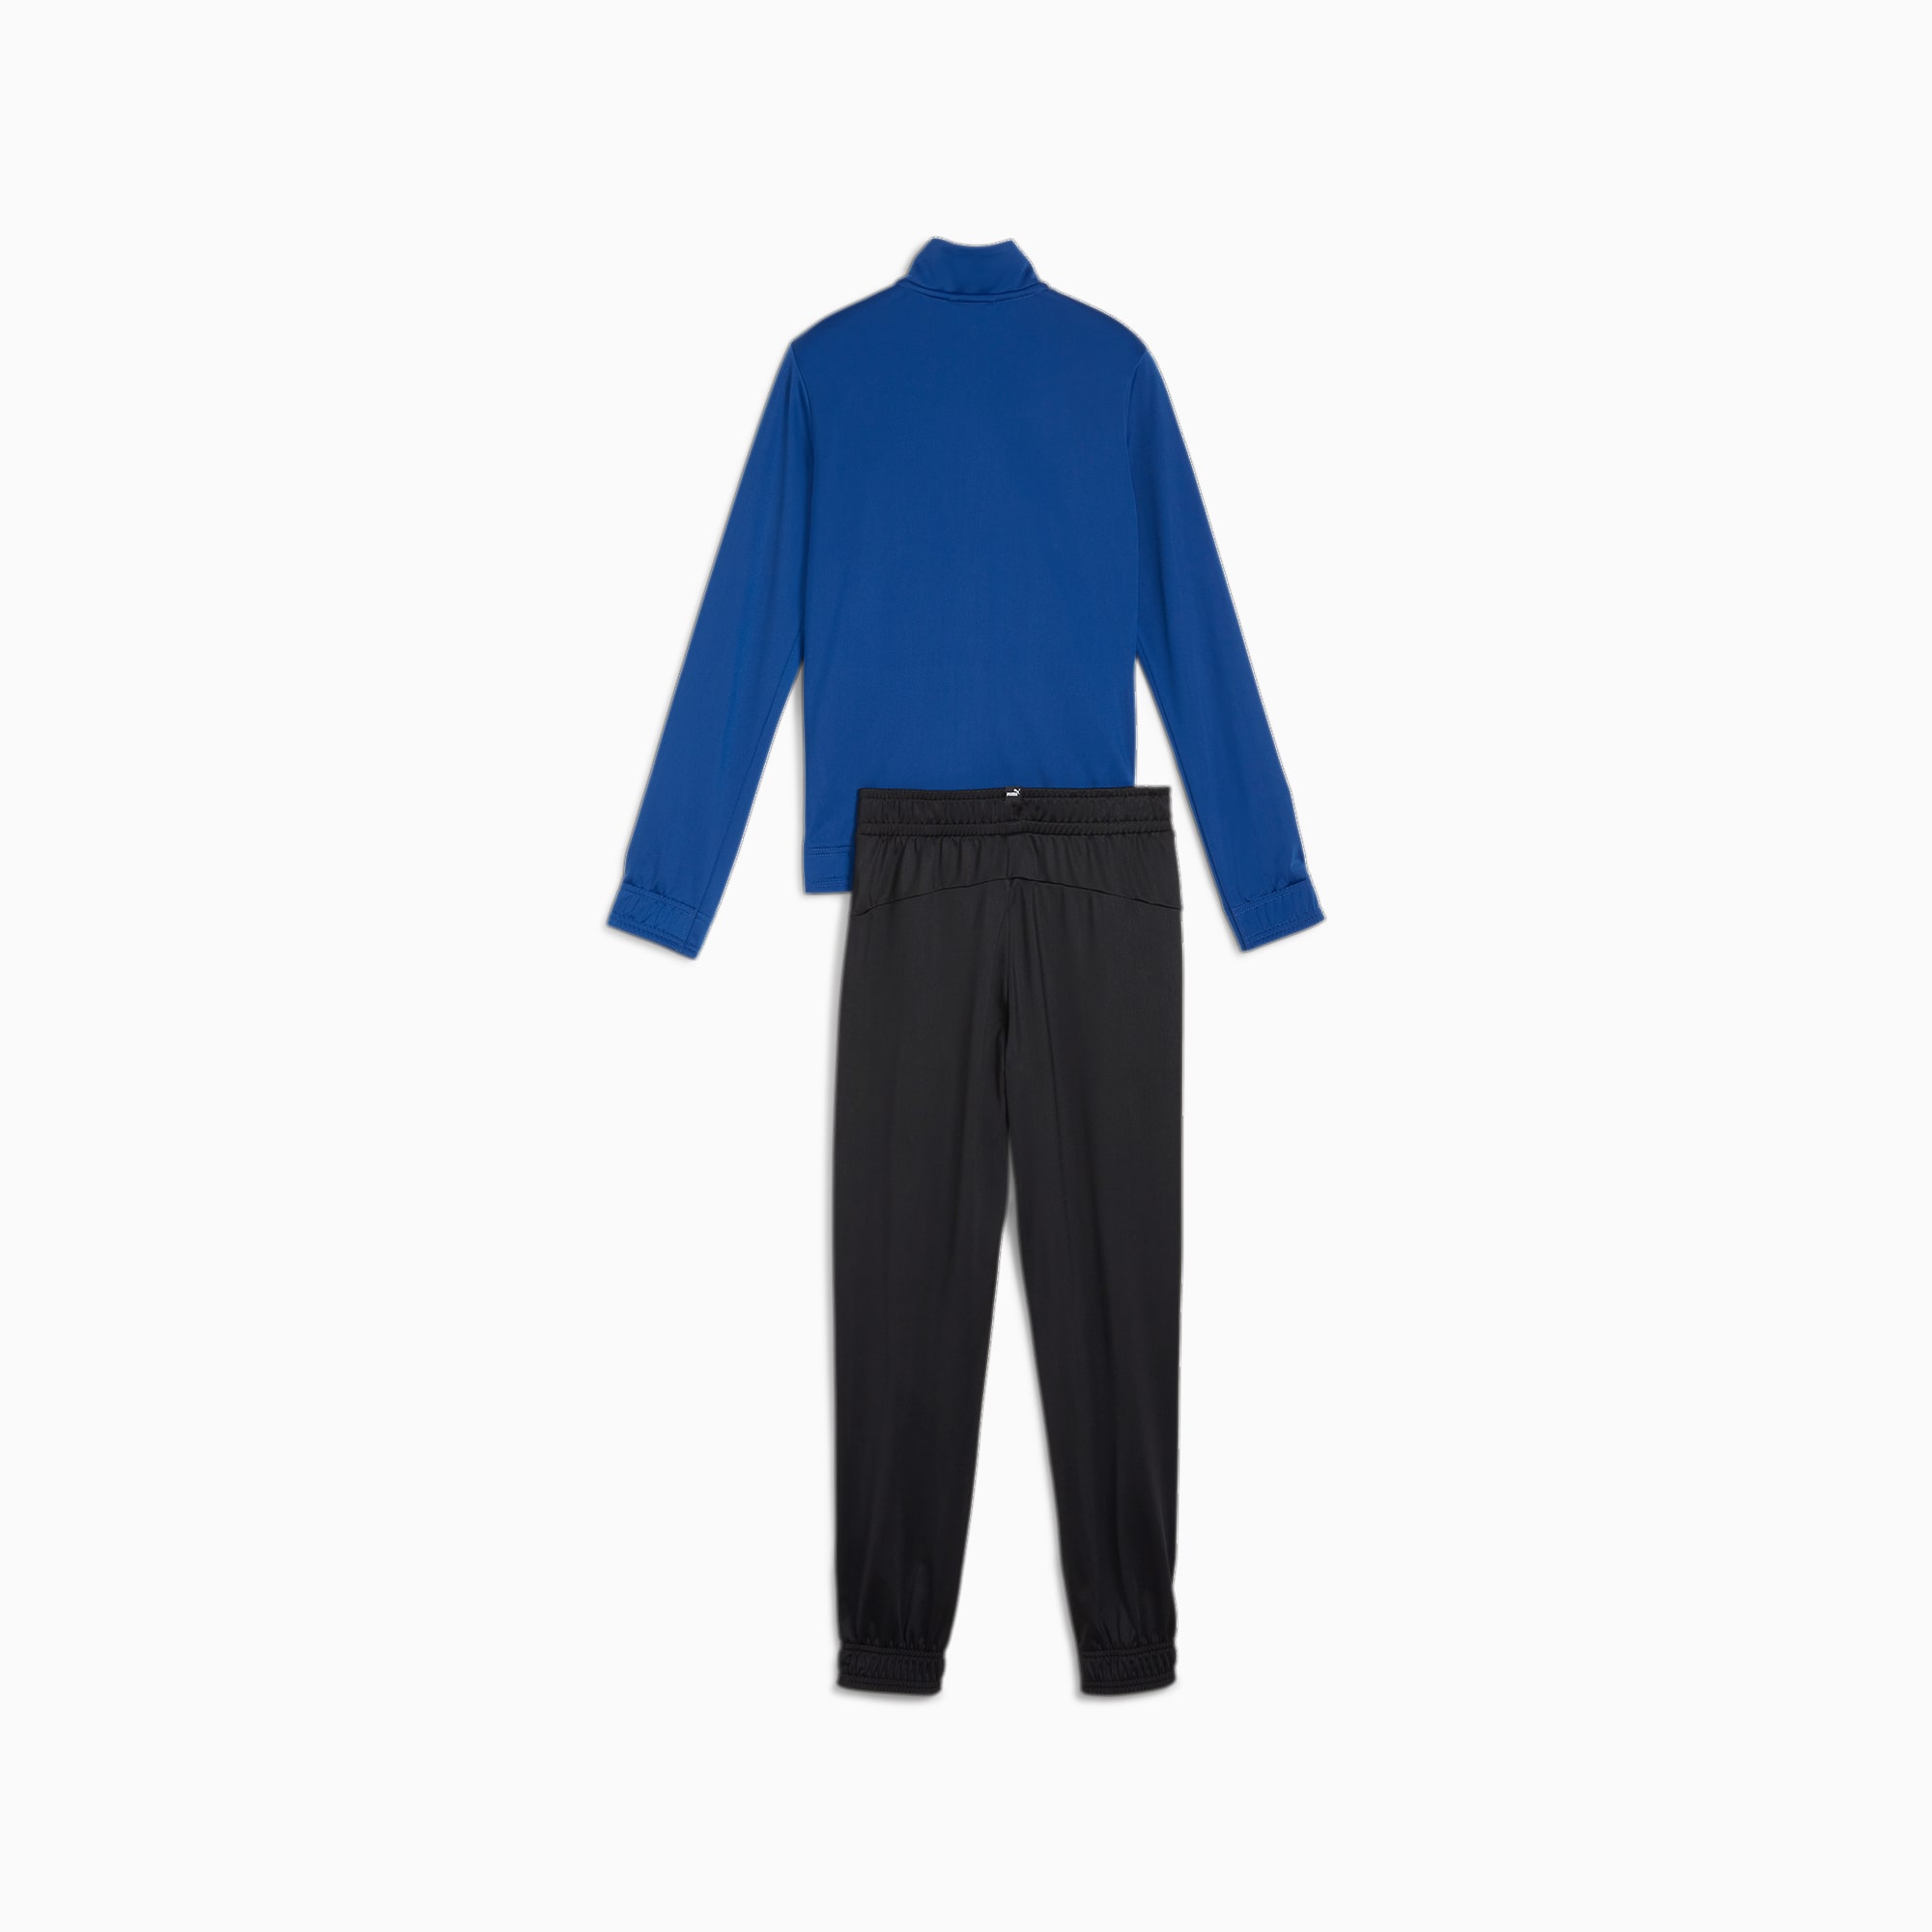 PUMA Jugend-Trainingsanzug Aus Polyester Für Kinder, Blau, Größe: 152, Kleidung